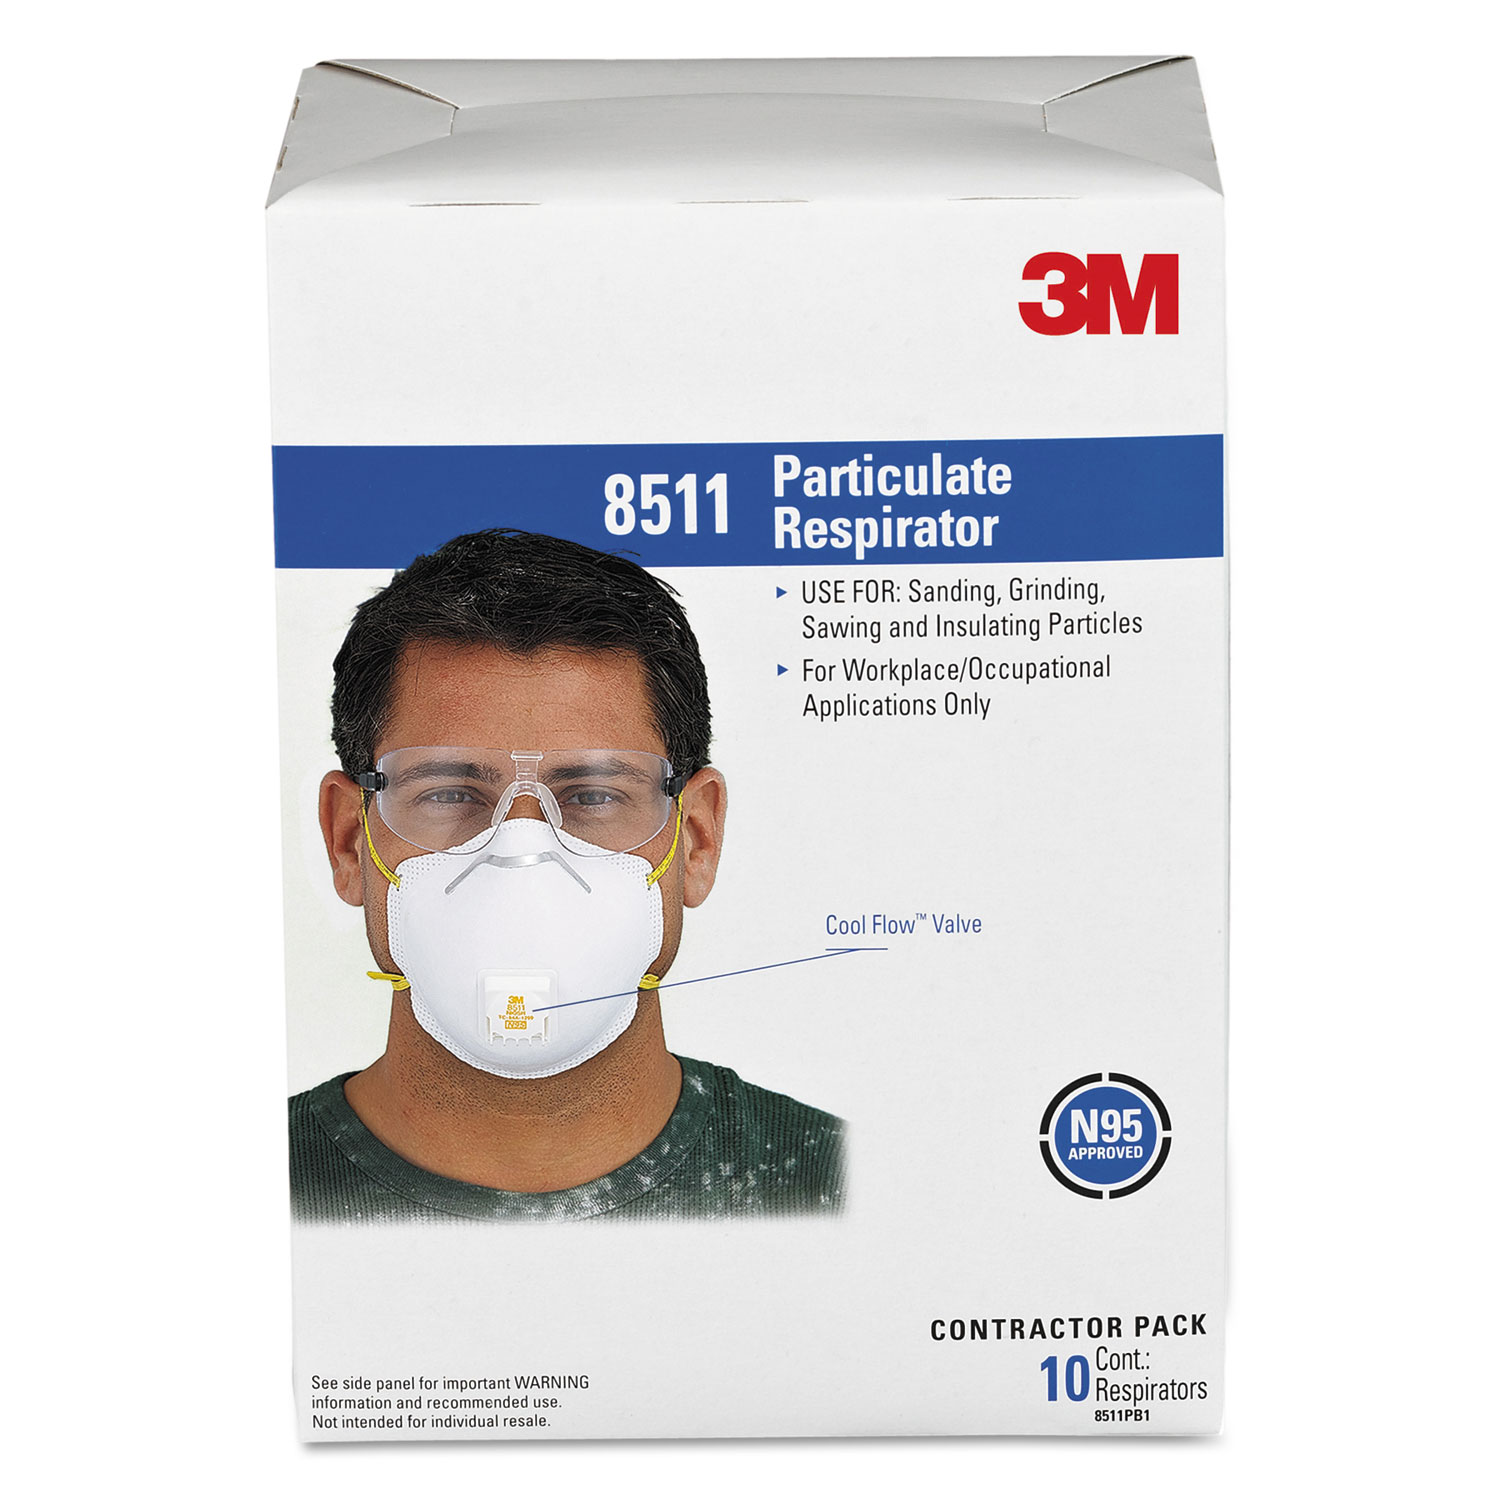  3M 7000002056 Particulate Respirator w/Cool Flow Exhalation Valve, 10 Masks/Box (MMM8511) 